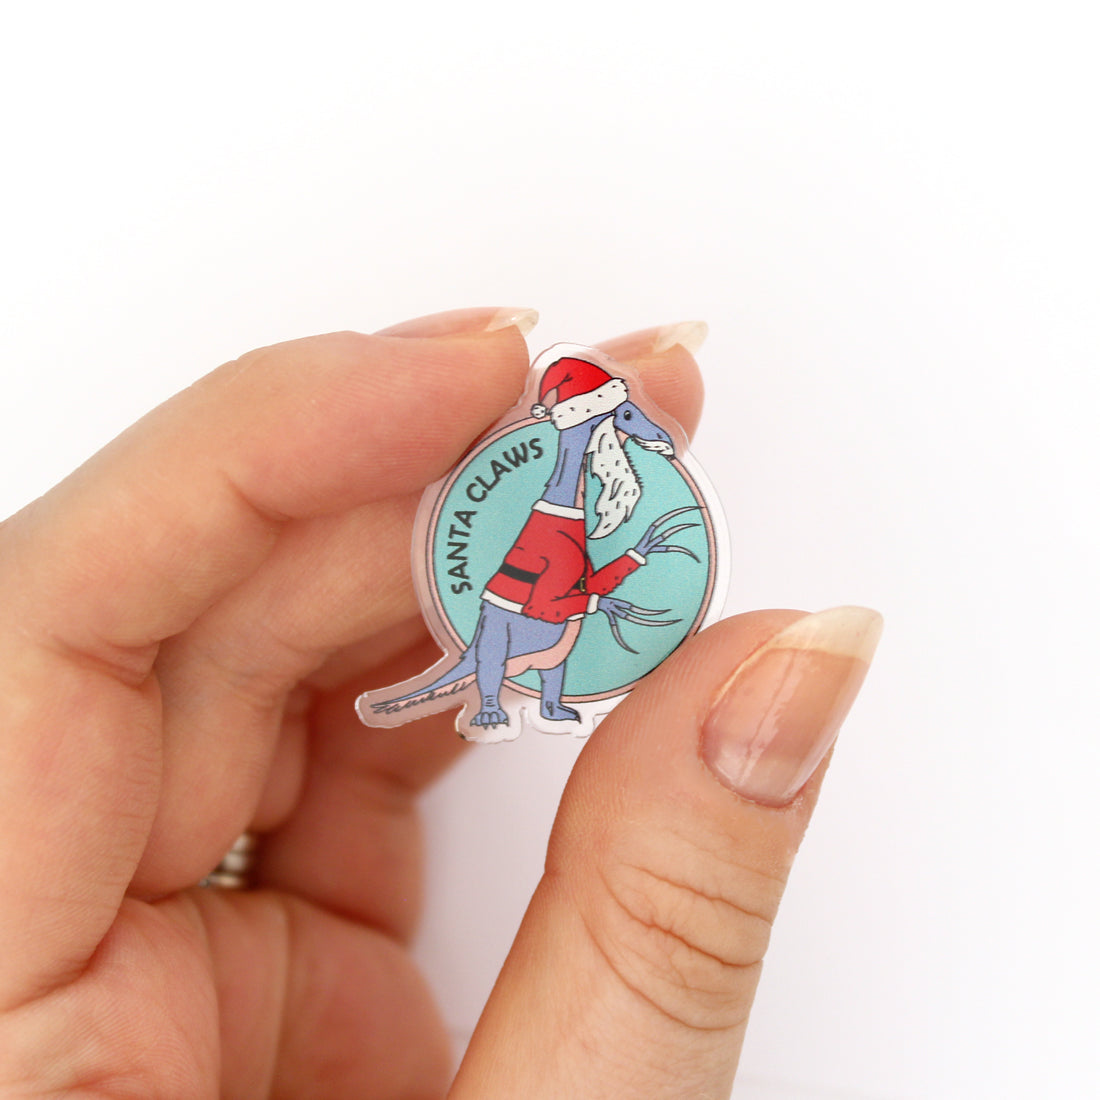 Hand holding a Santa Claws acrylic pin